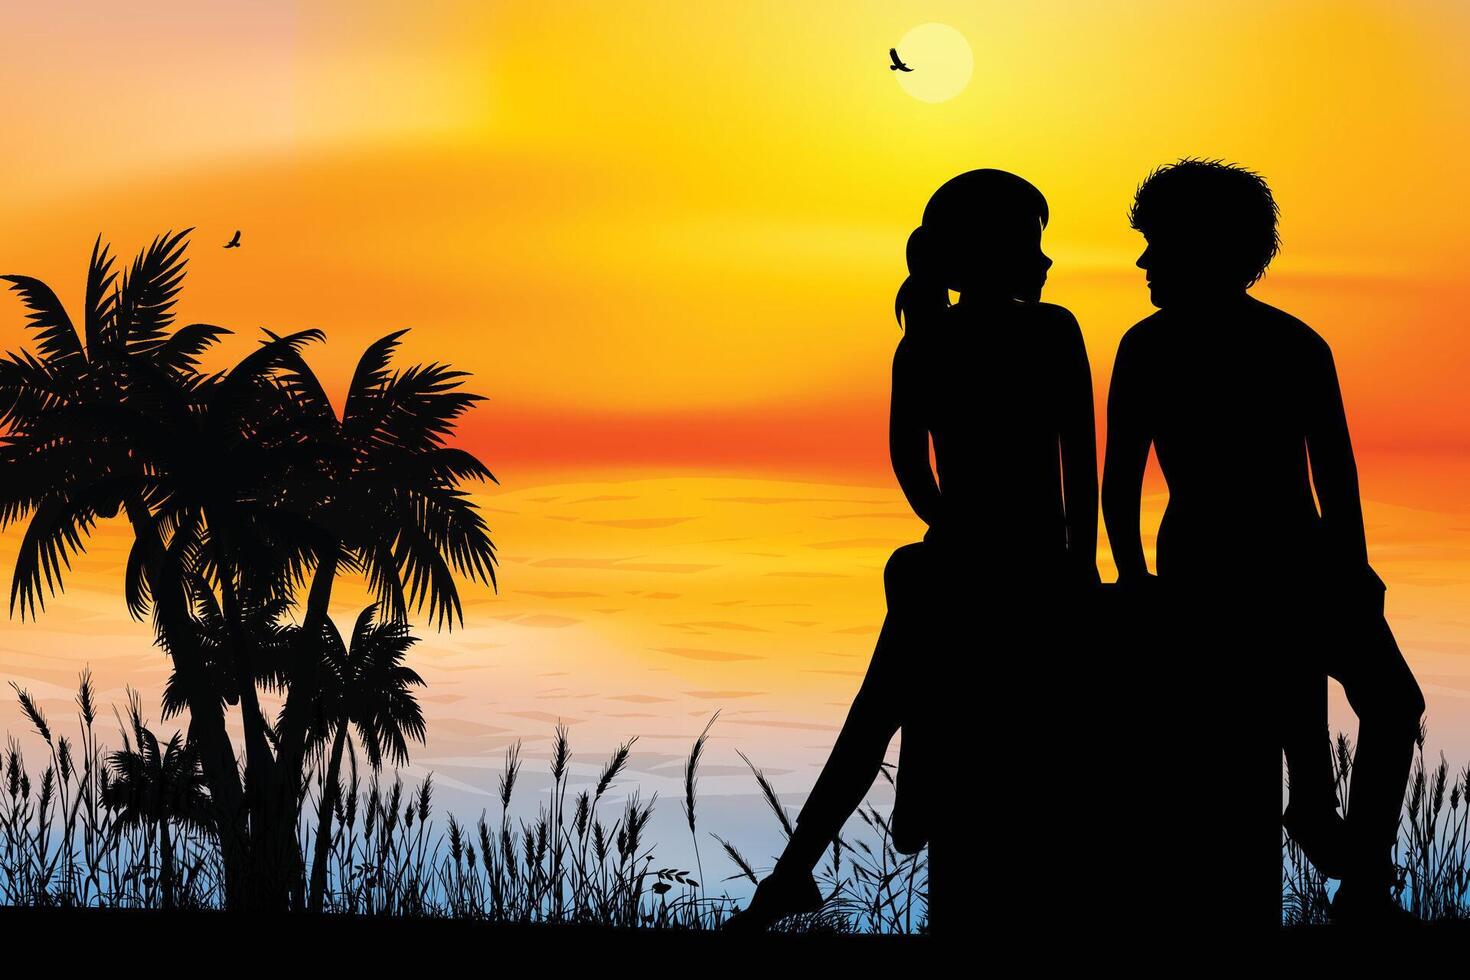 Cute Couple Fall in Love Silhouette vector